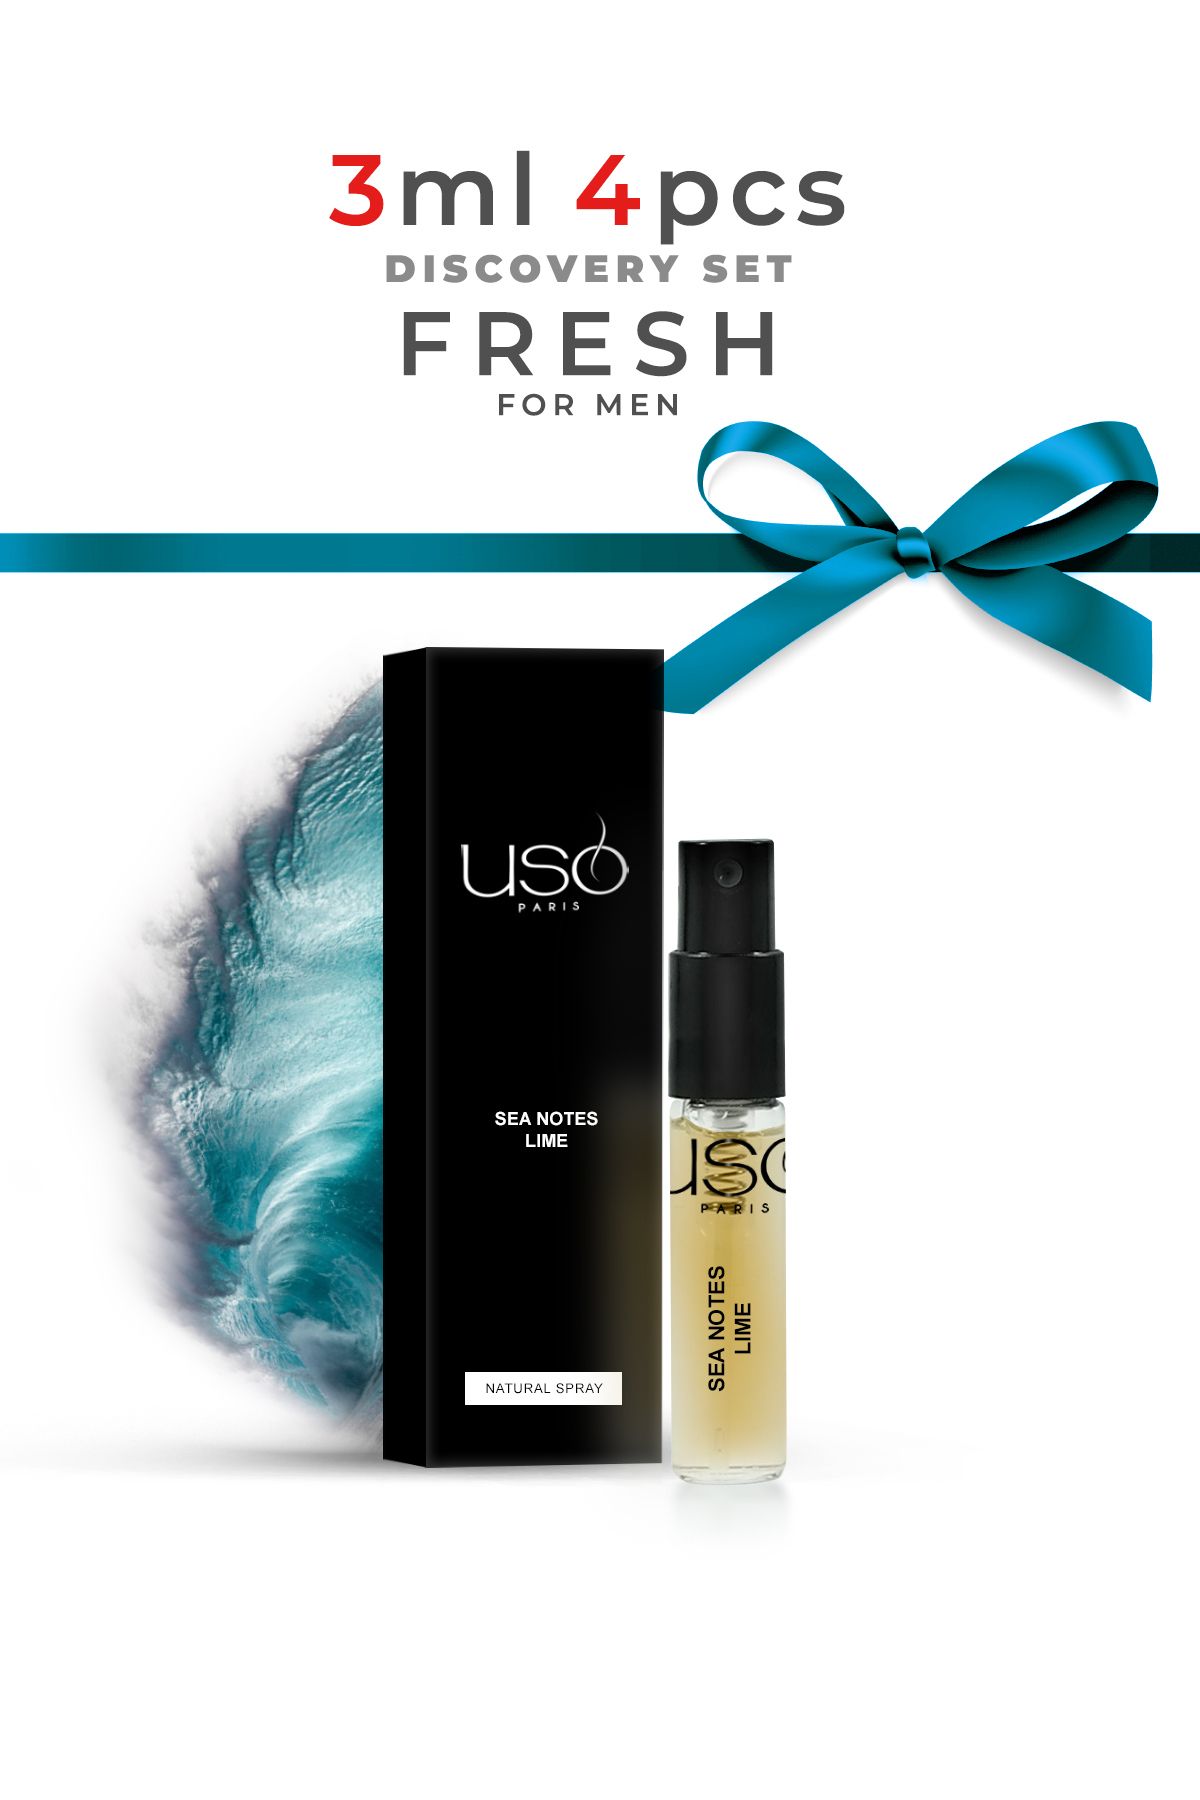 USO Fresh Parfum Discovery Set 3ml X 4 Pcs Men